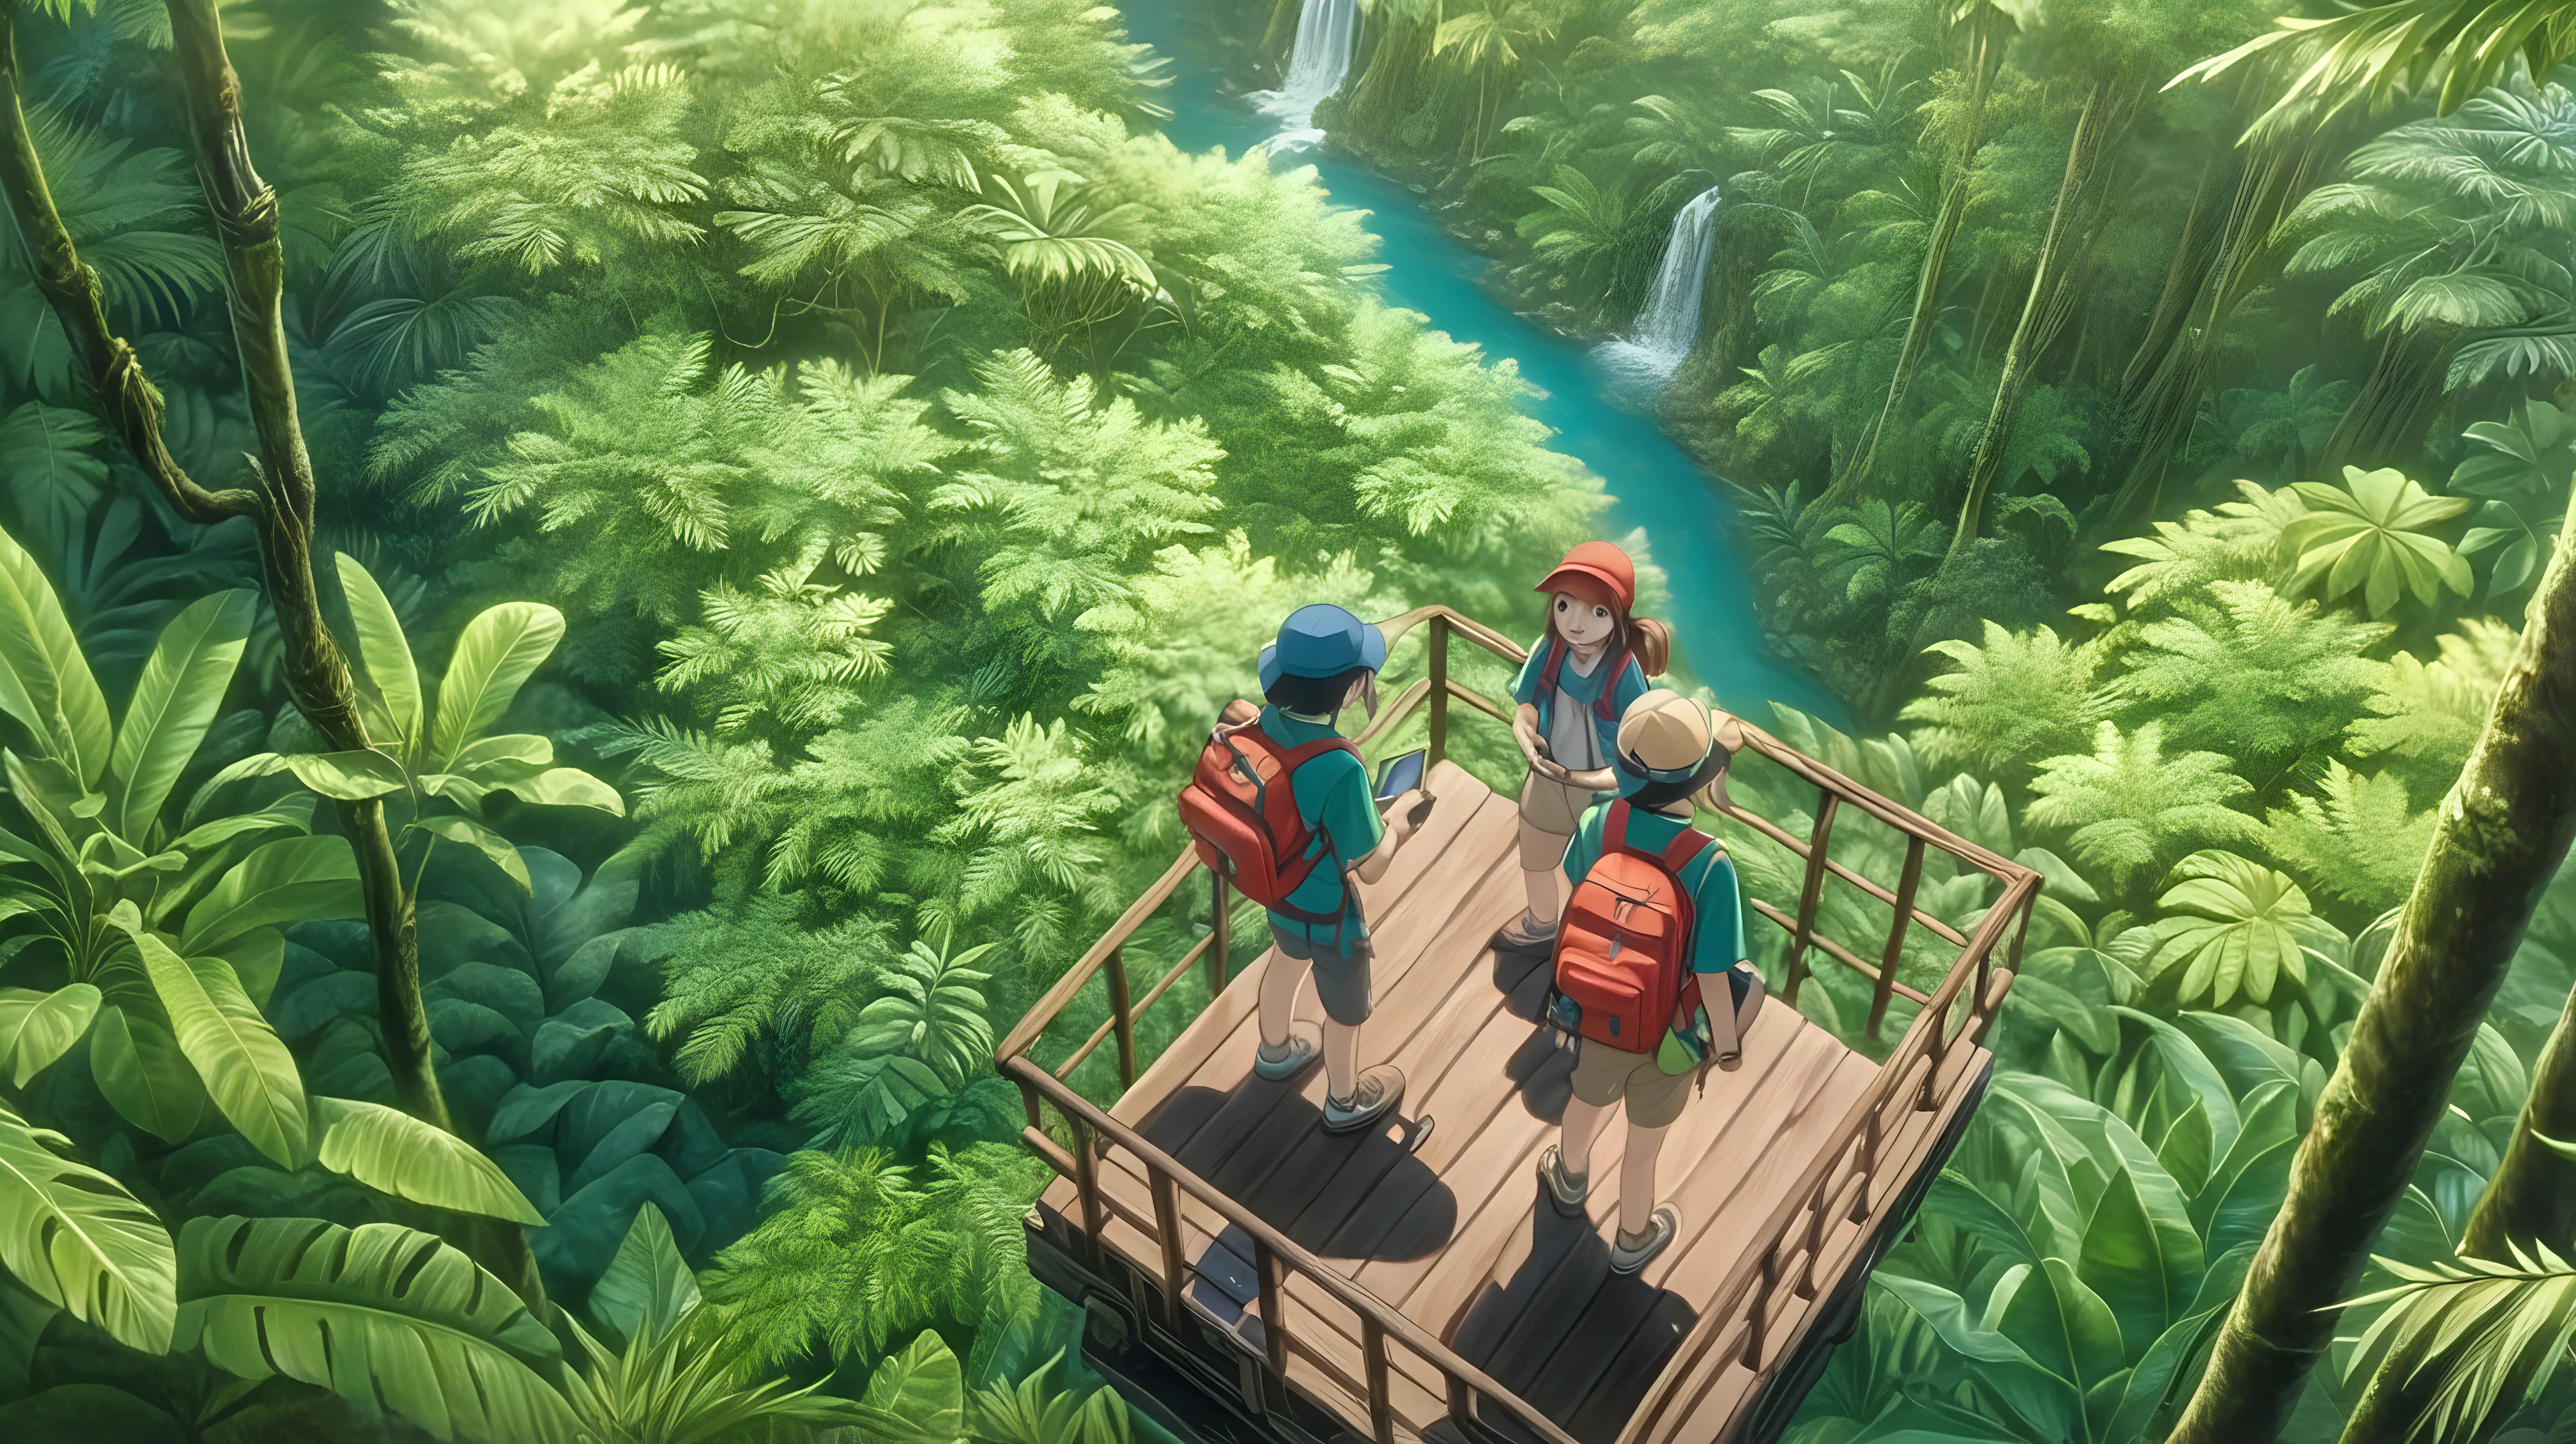 Japanese AnimeInspired Aerial Exploration of Rainforest